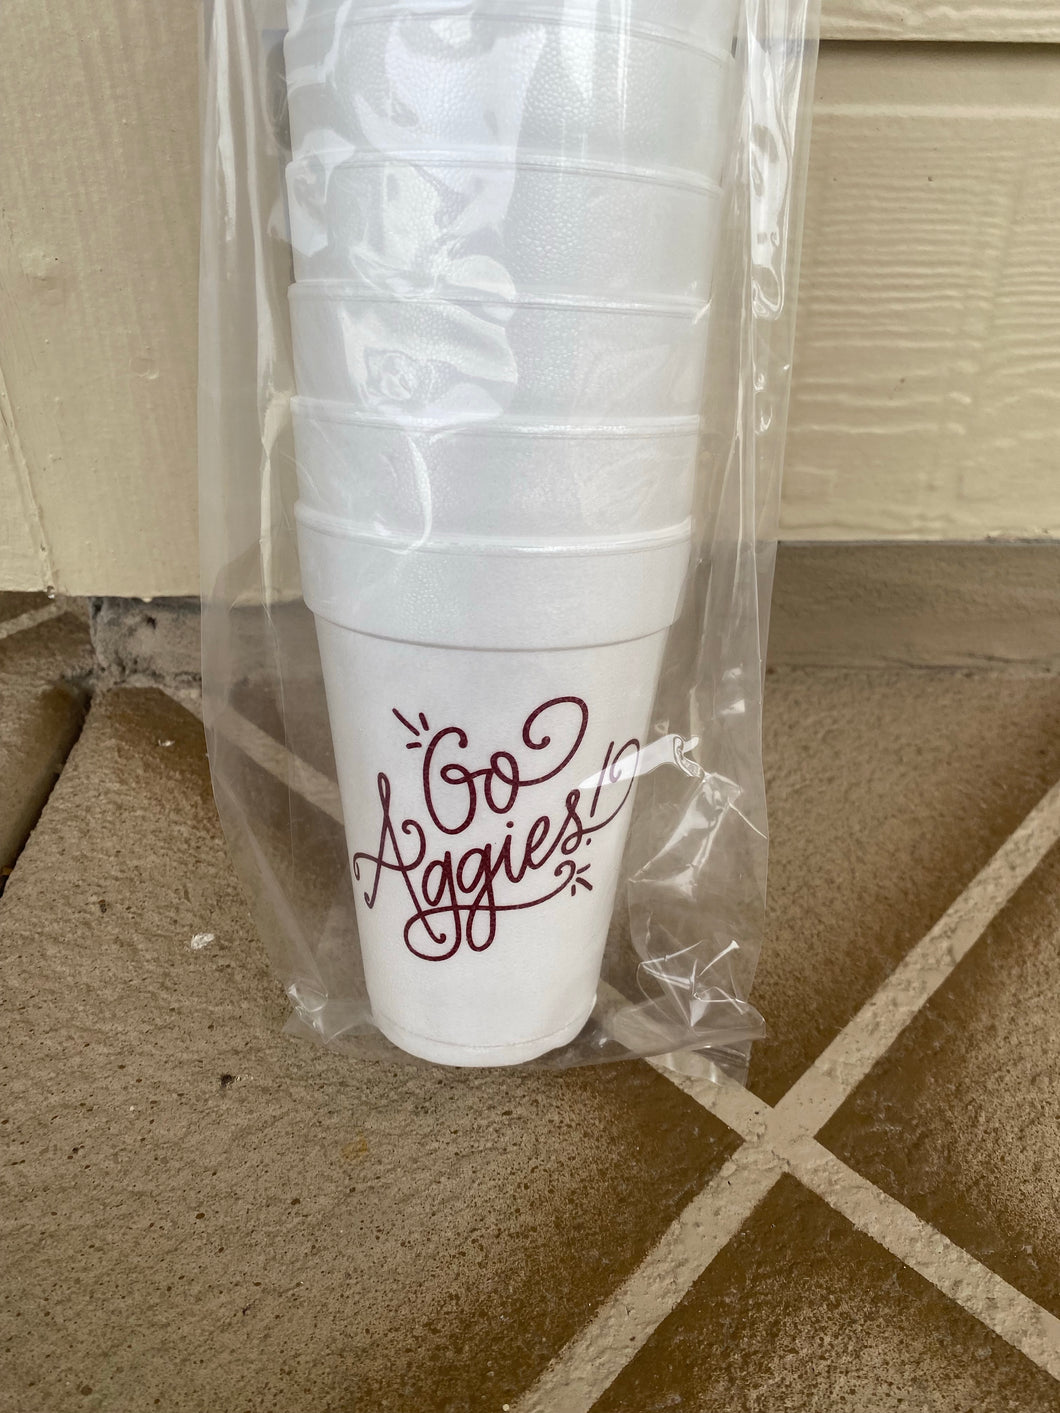 Aggies Cups